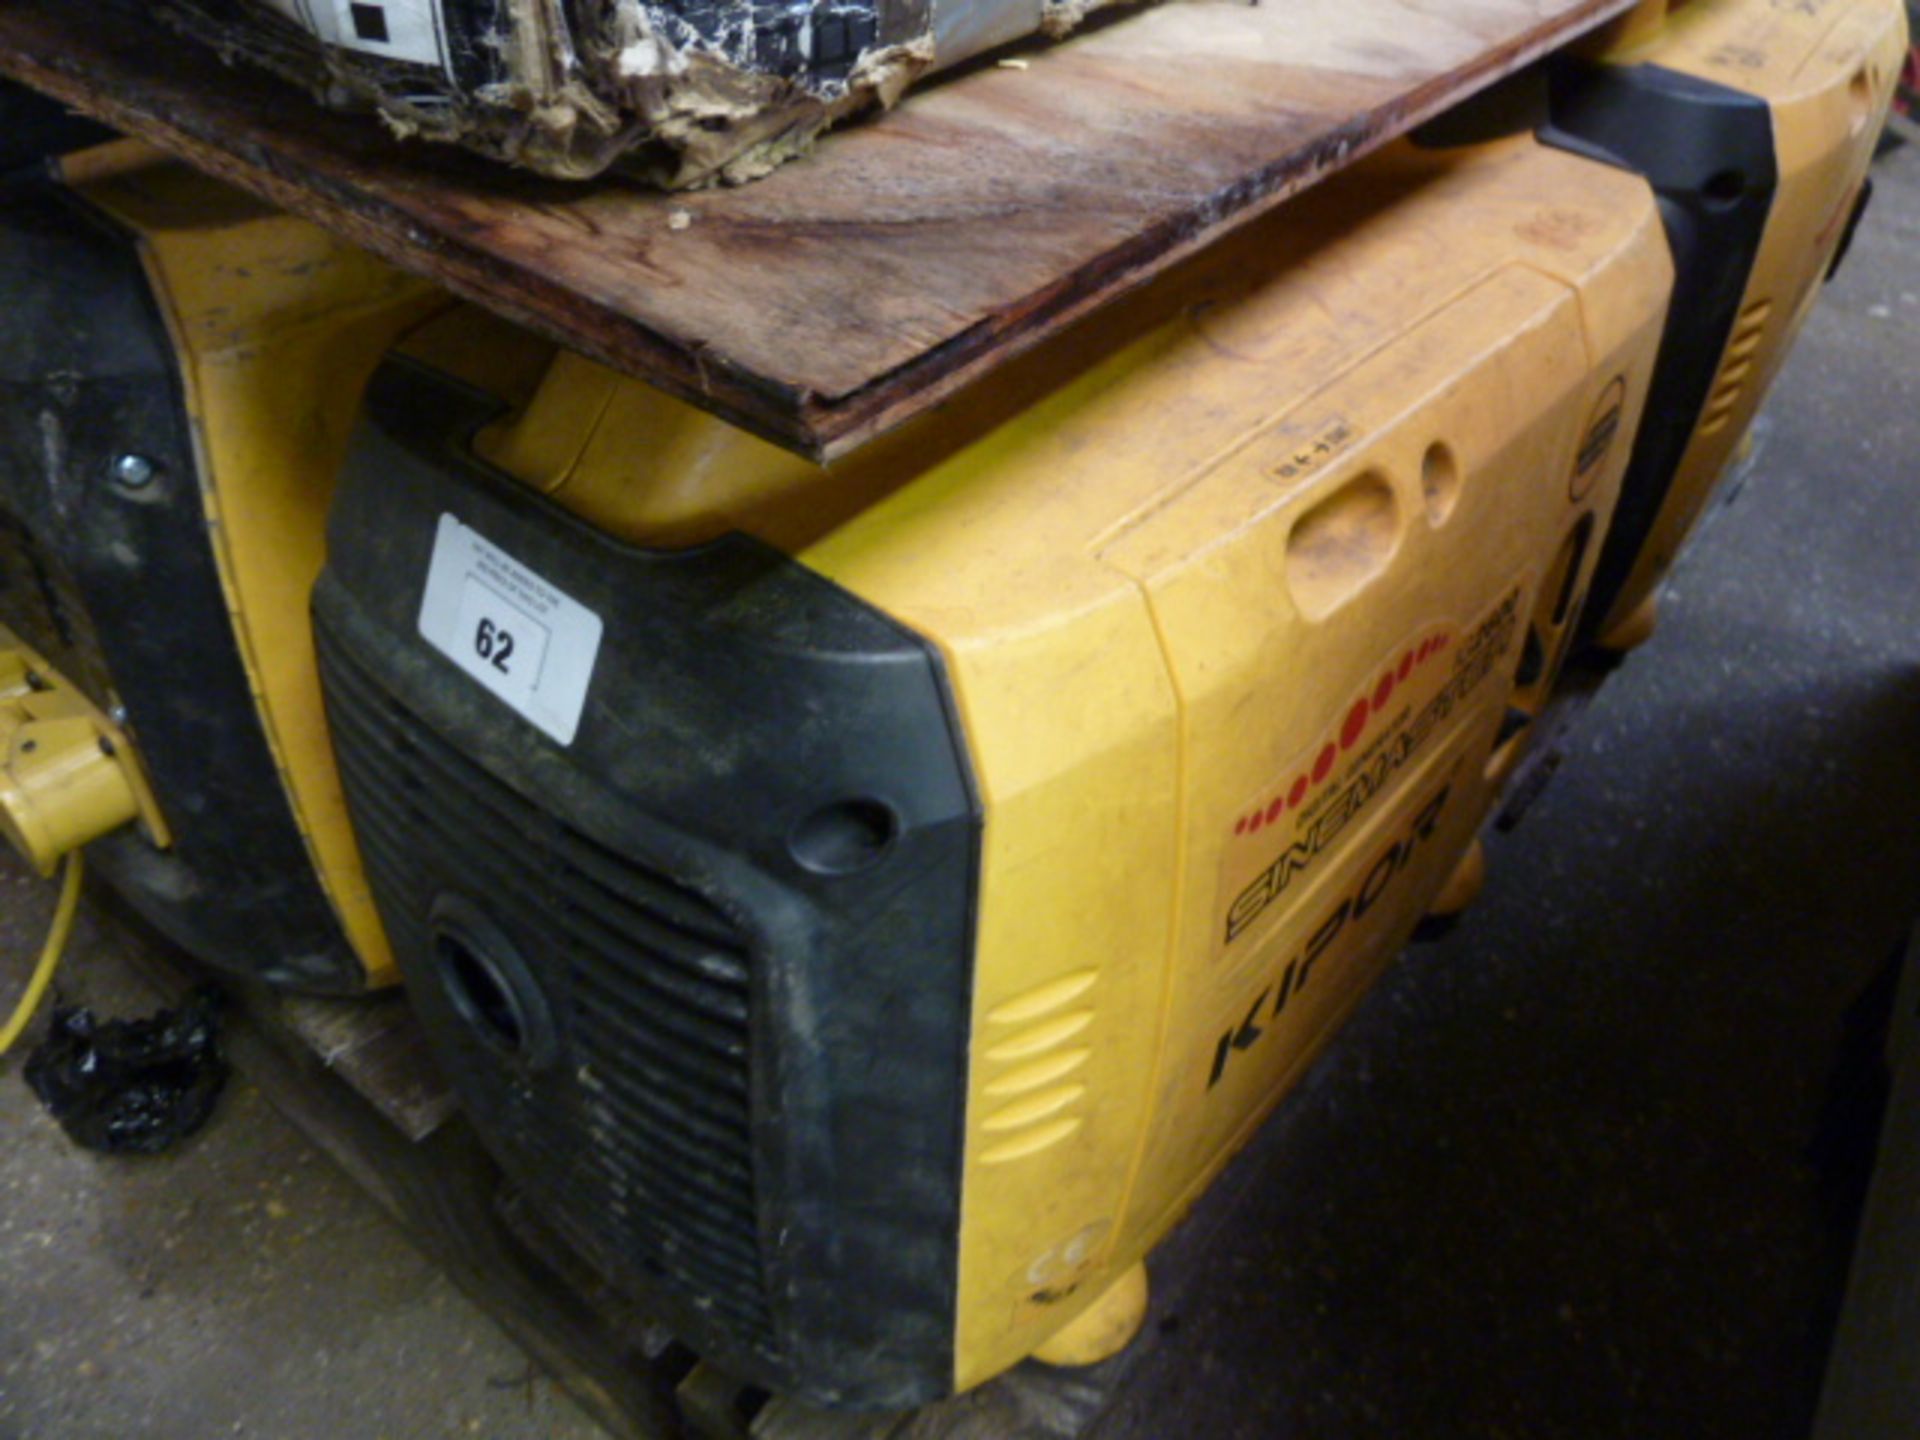 Kipor Sinemaster IG2600 silenced generator